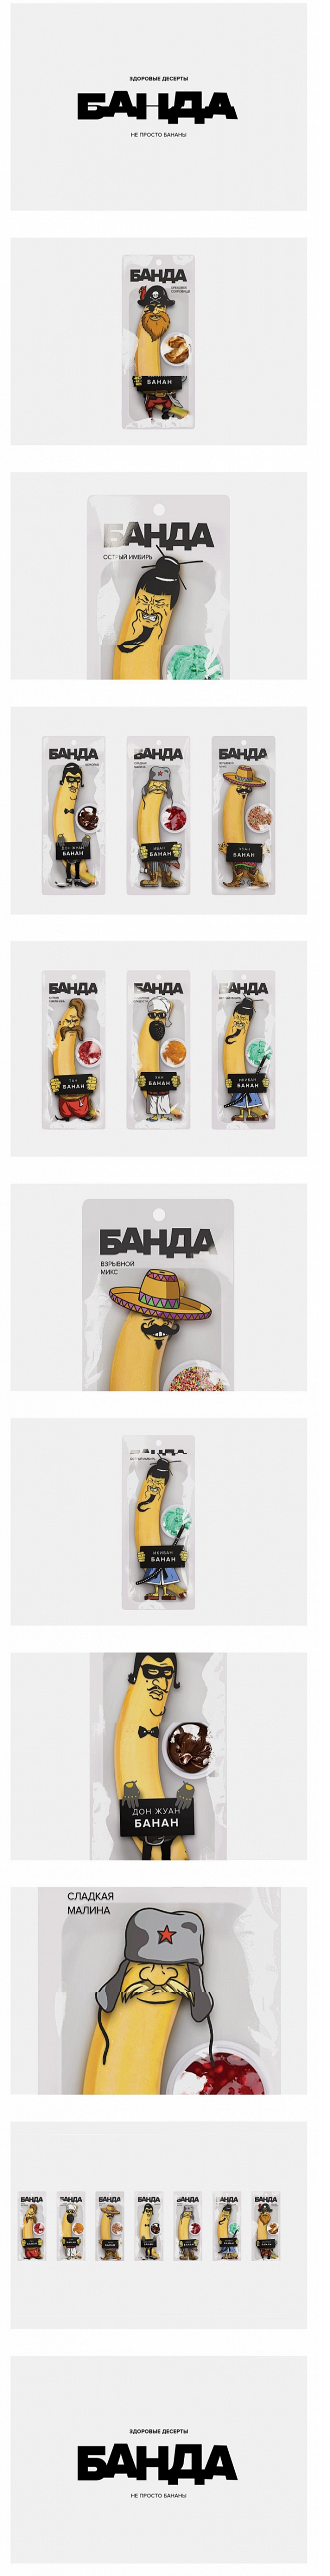 Банда香蕉容器的甜点品牌创意包装设 ...